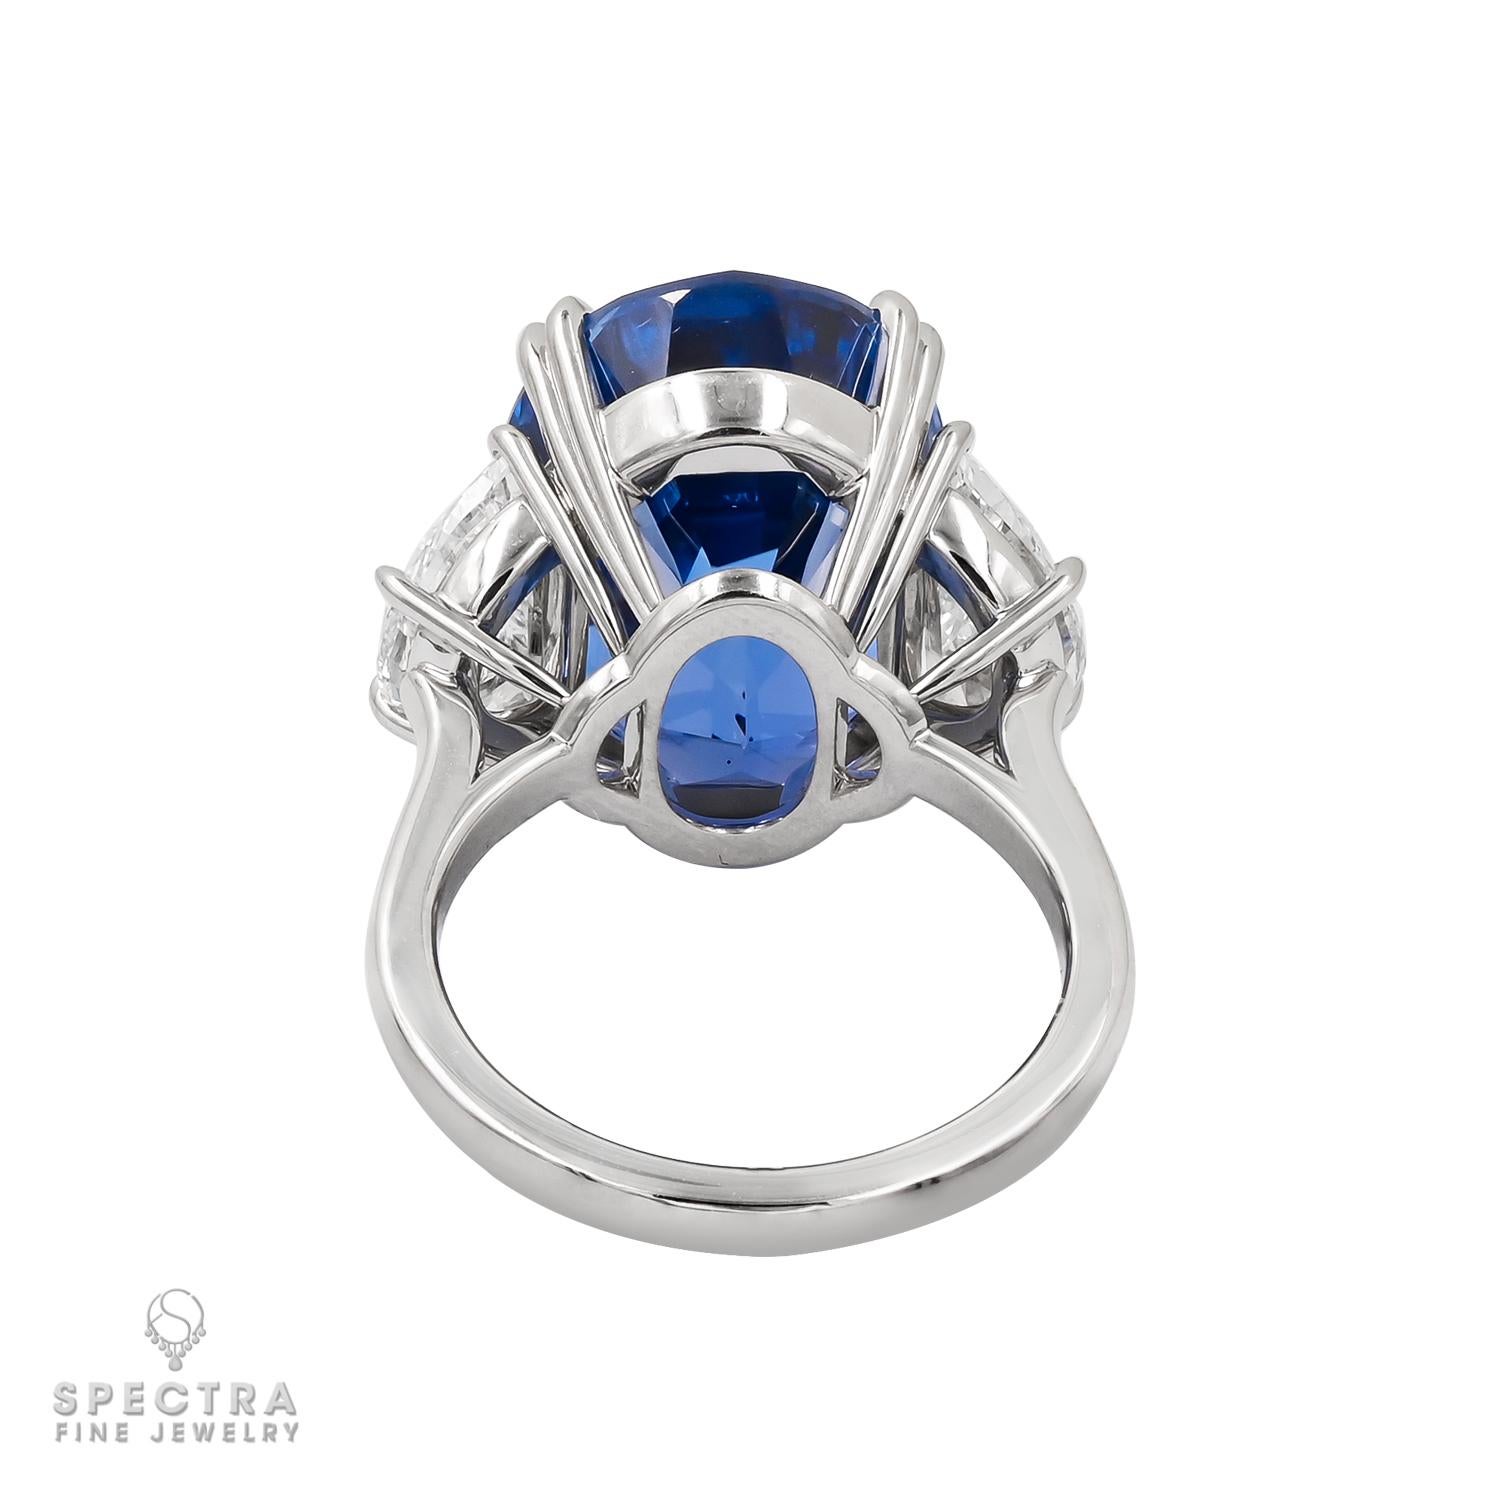 Contemporary Spectra Fine Jewelry AGL Certified 20.63 Carat Ceylon Sapphire Diamond Ring For Sale